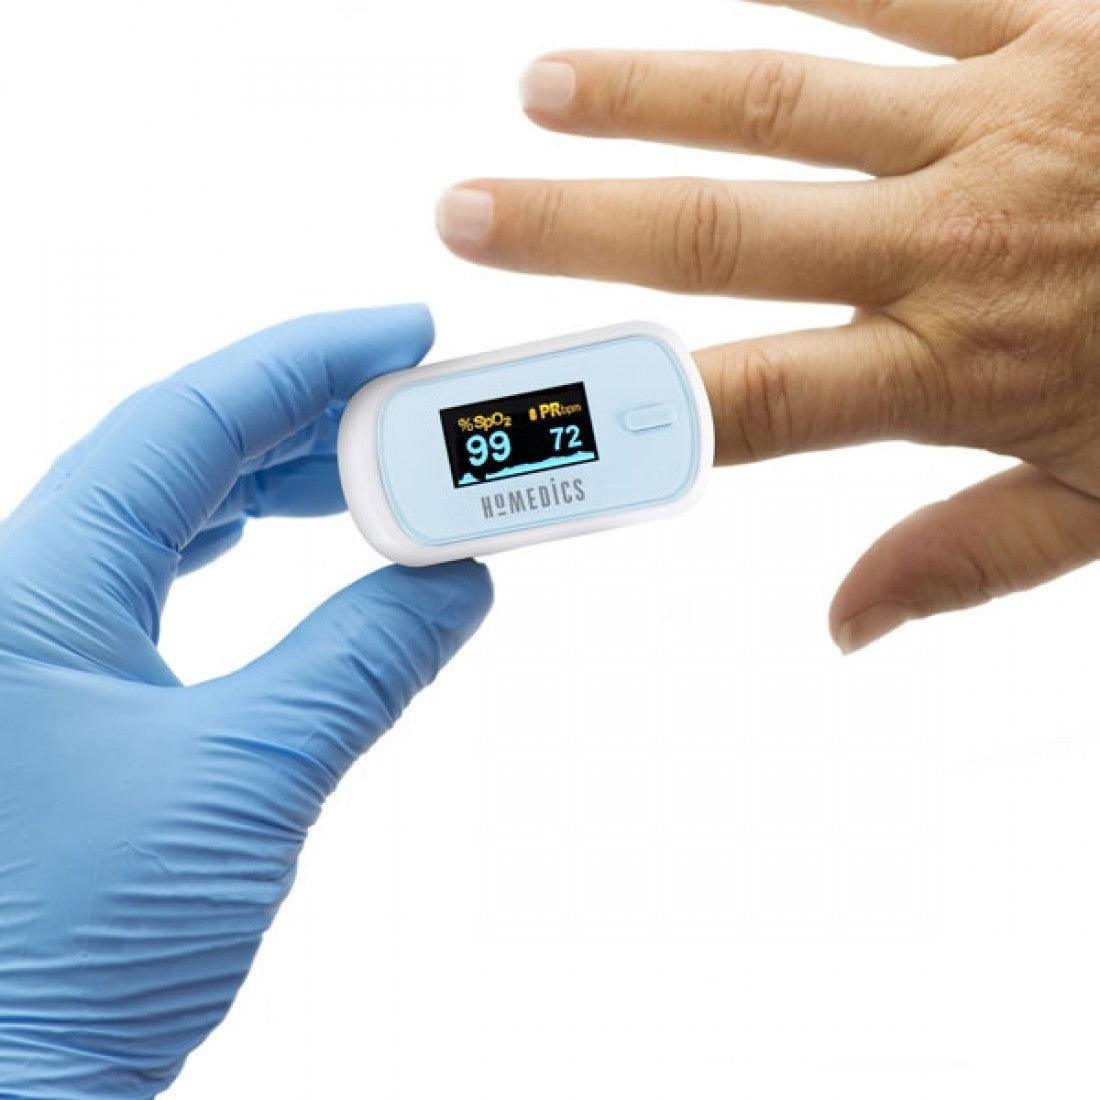 HoMedics Oxywatch Fingertip Pulse Oximeter - White | PX-101-EU from DID Electrical - guaranteed Irish, guaranteed quality service. (6977456636092)